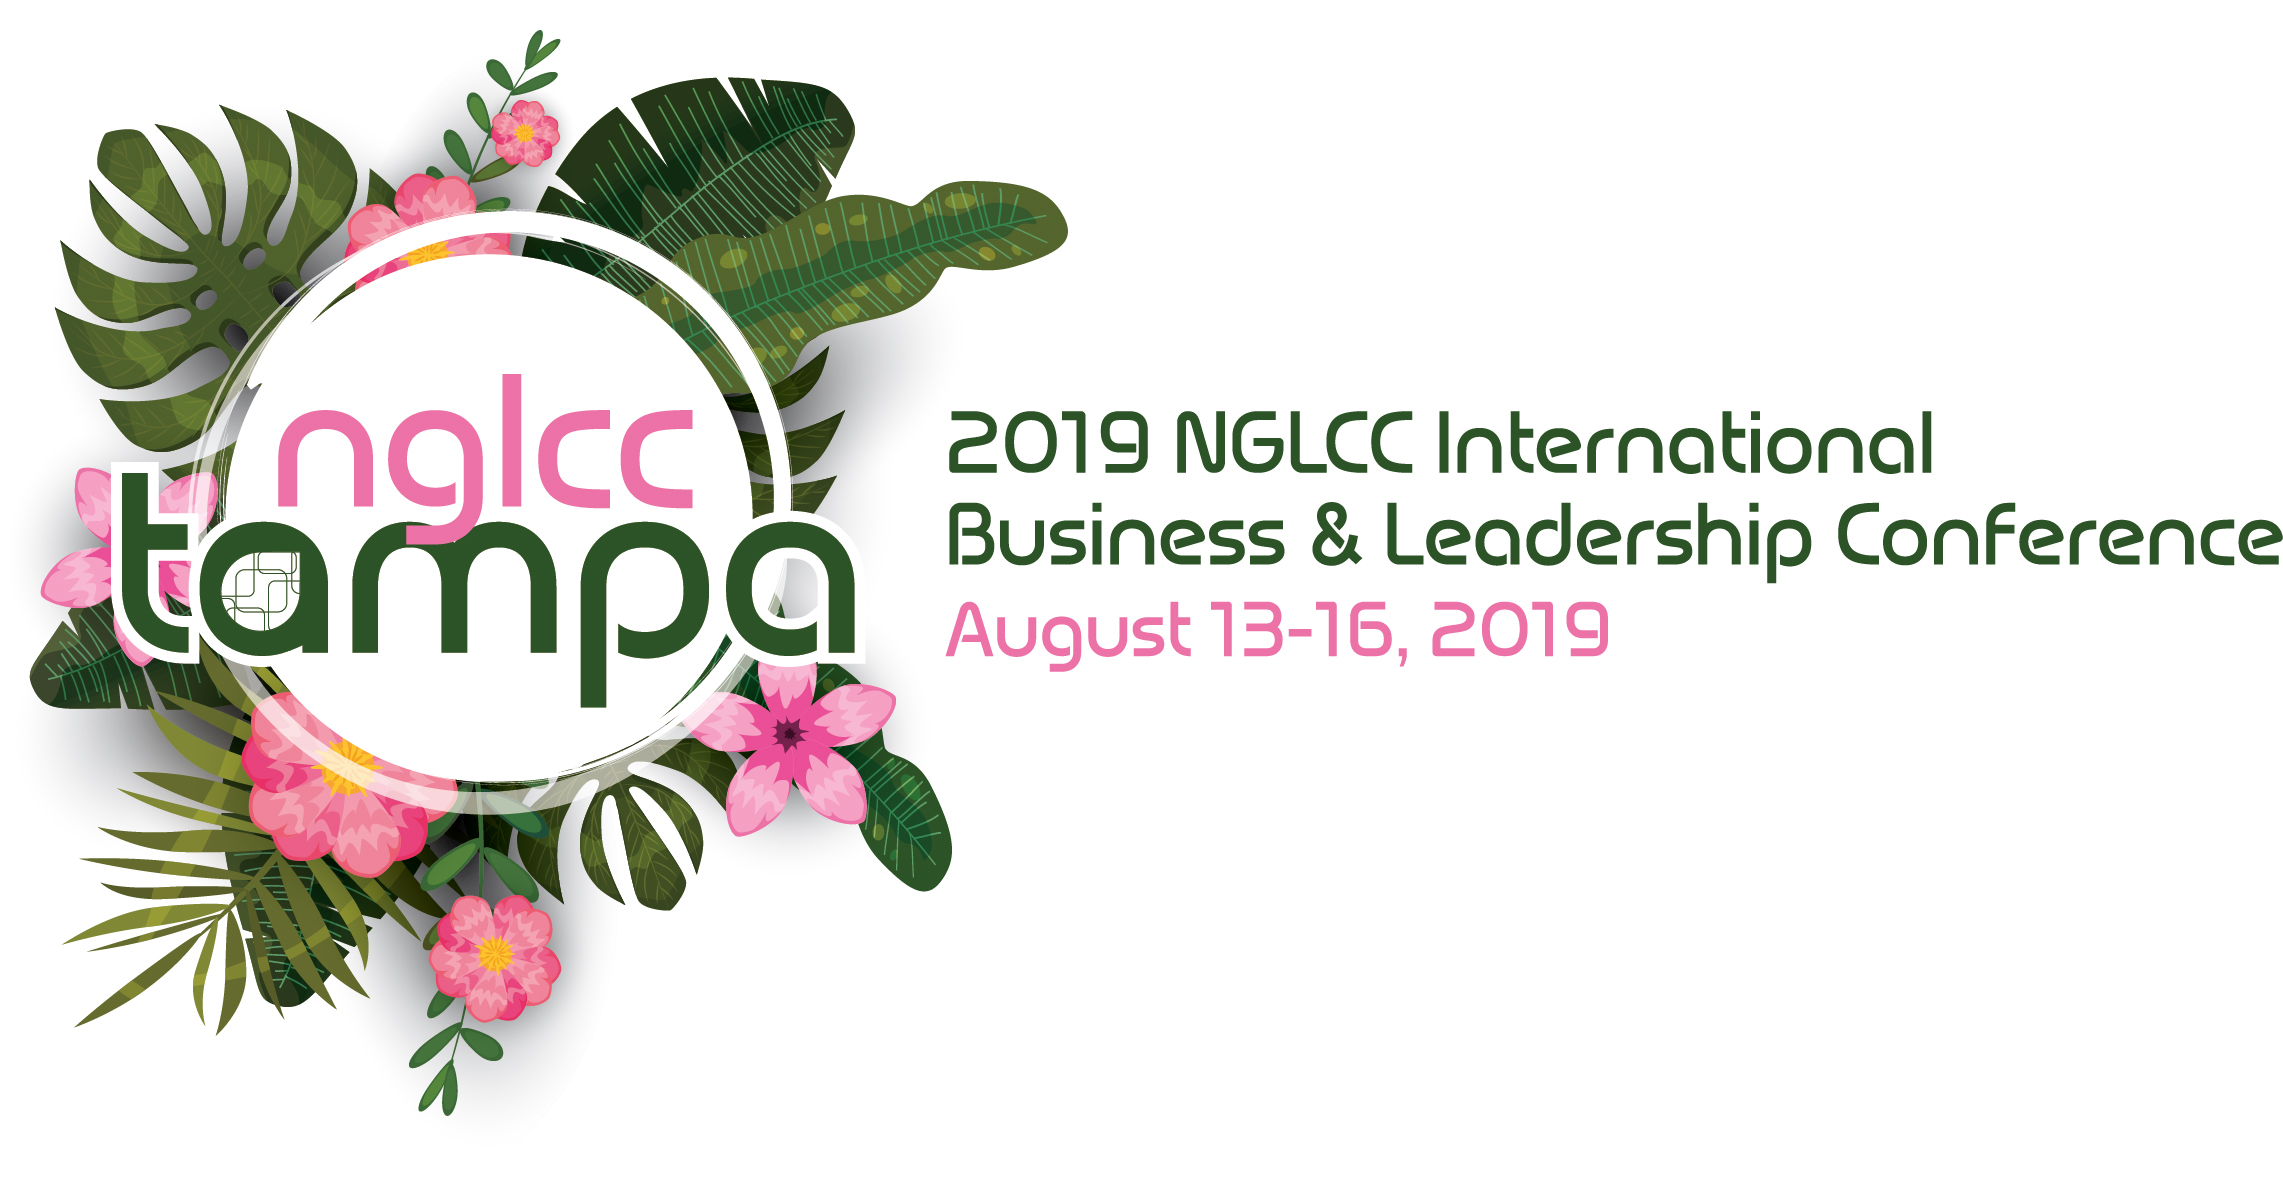 2019 NGLCC International Business & Leadership Conference